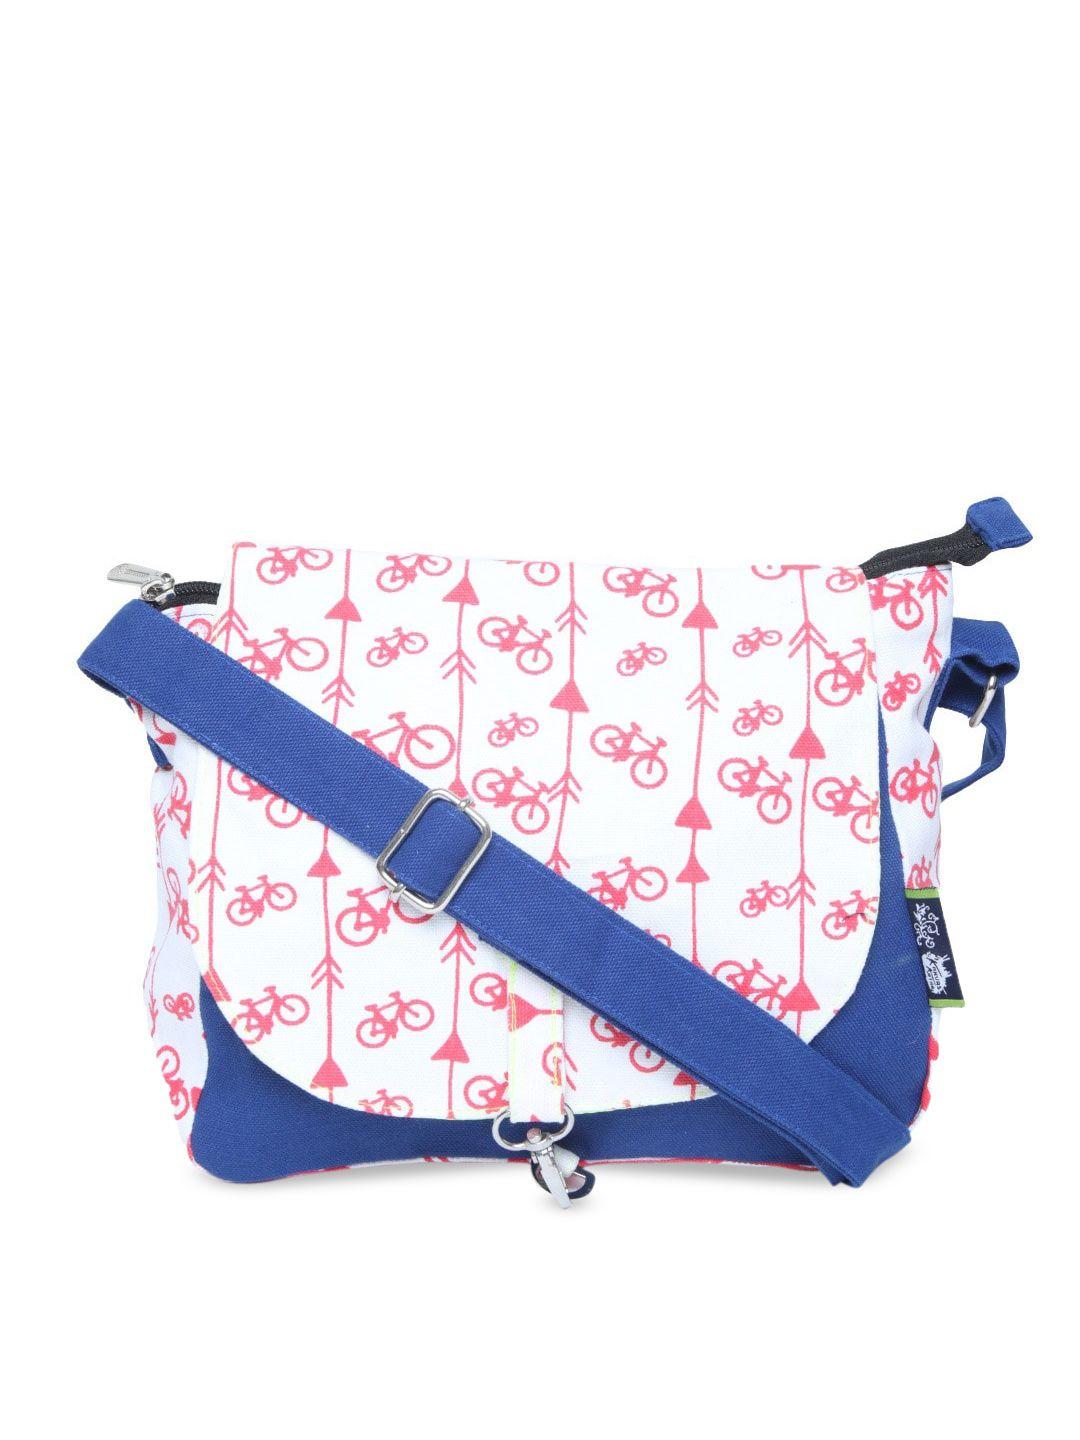 kanvas katha navy blue printed structured sling bag